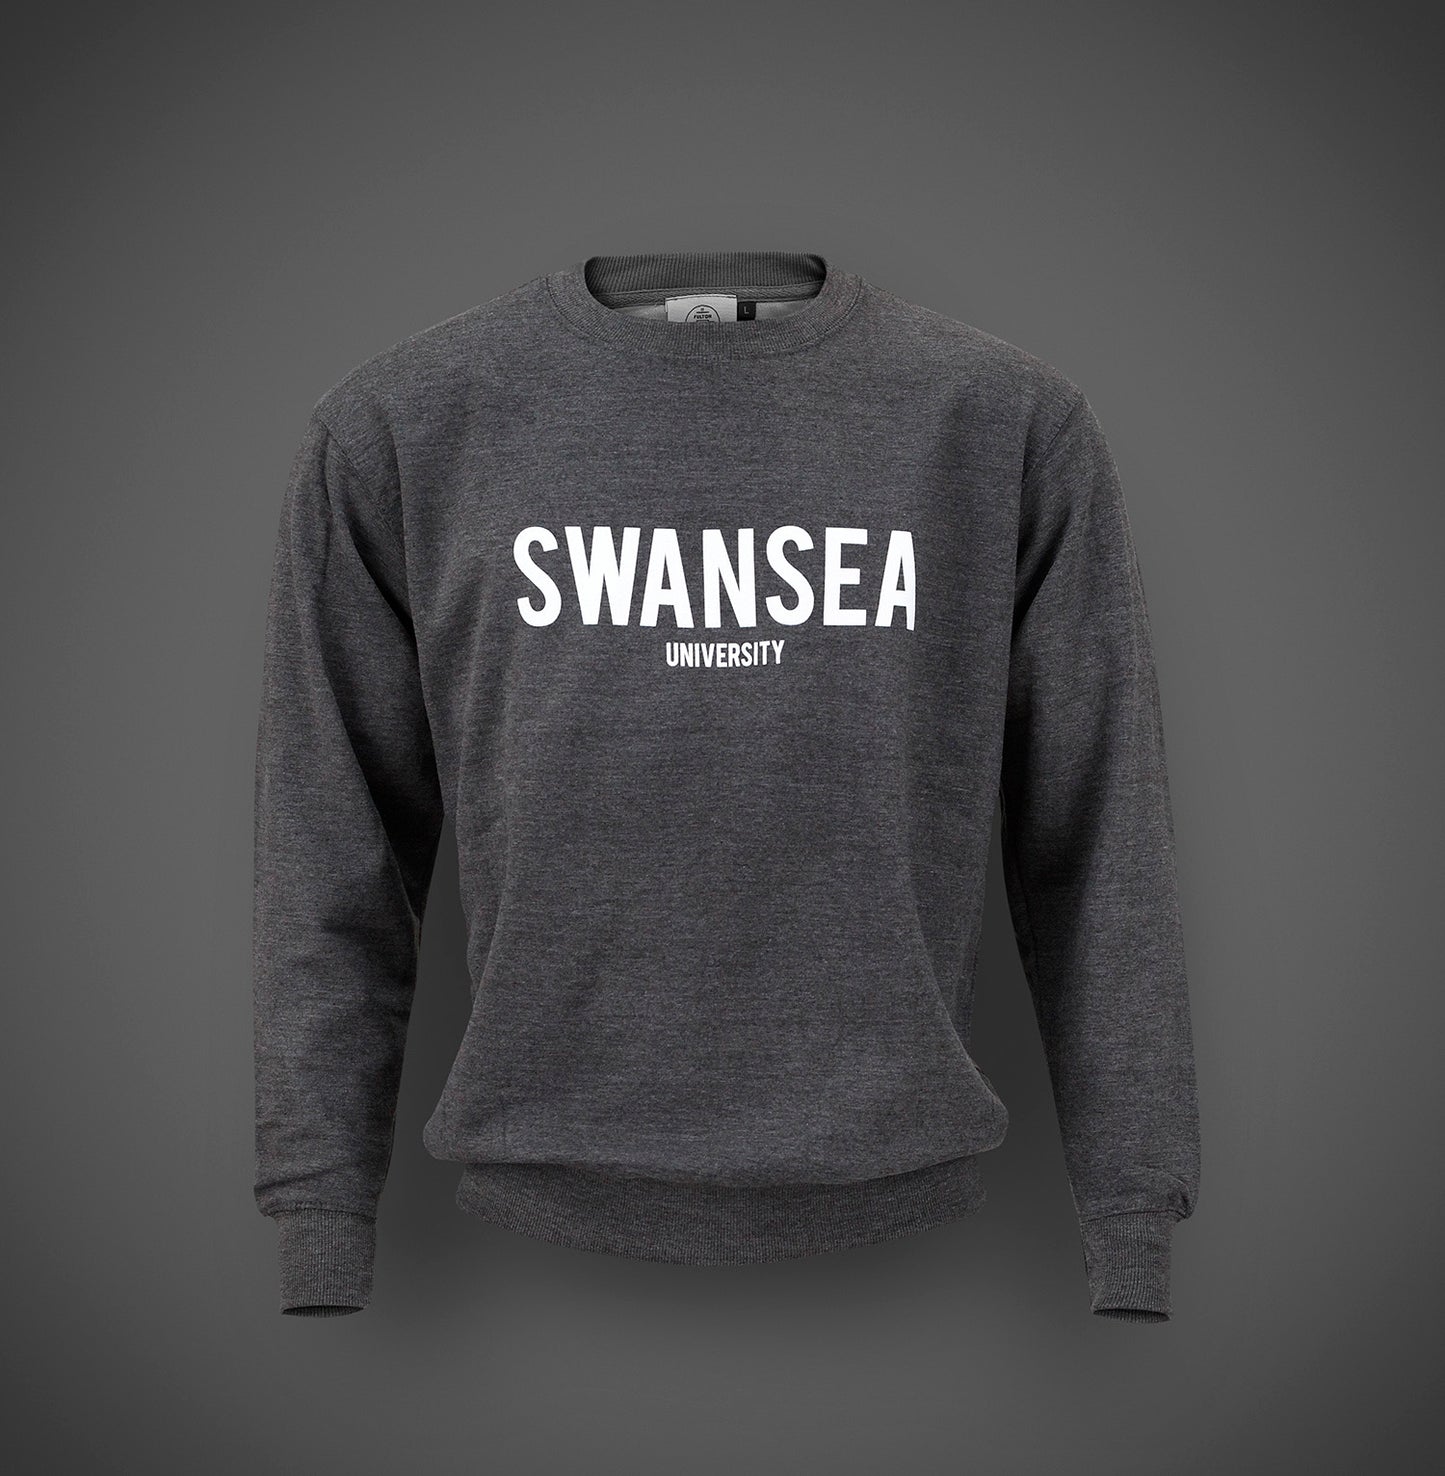 SALE -Swansea University Sweatshirt - Statement